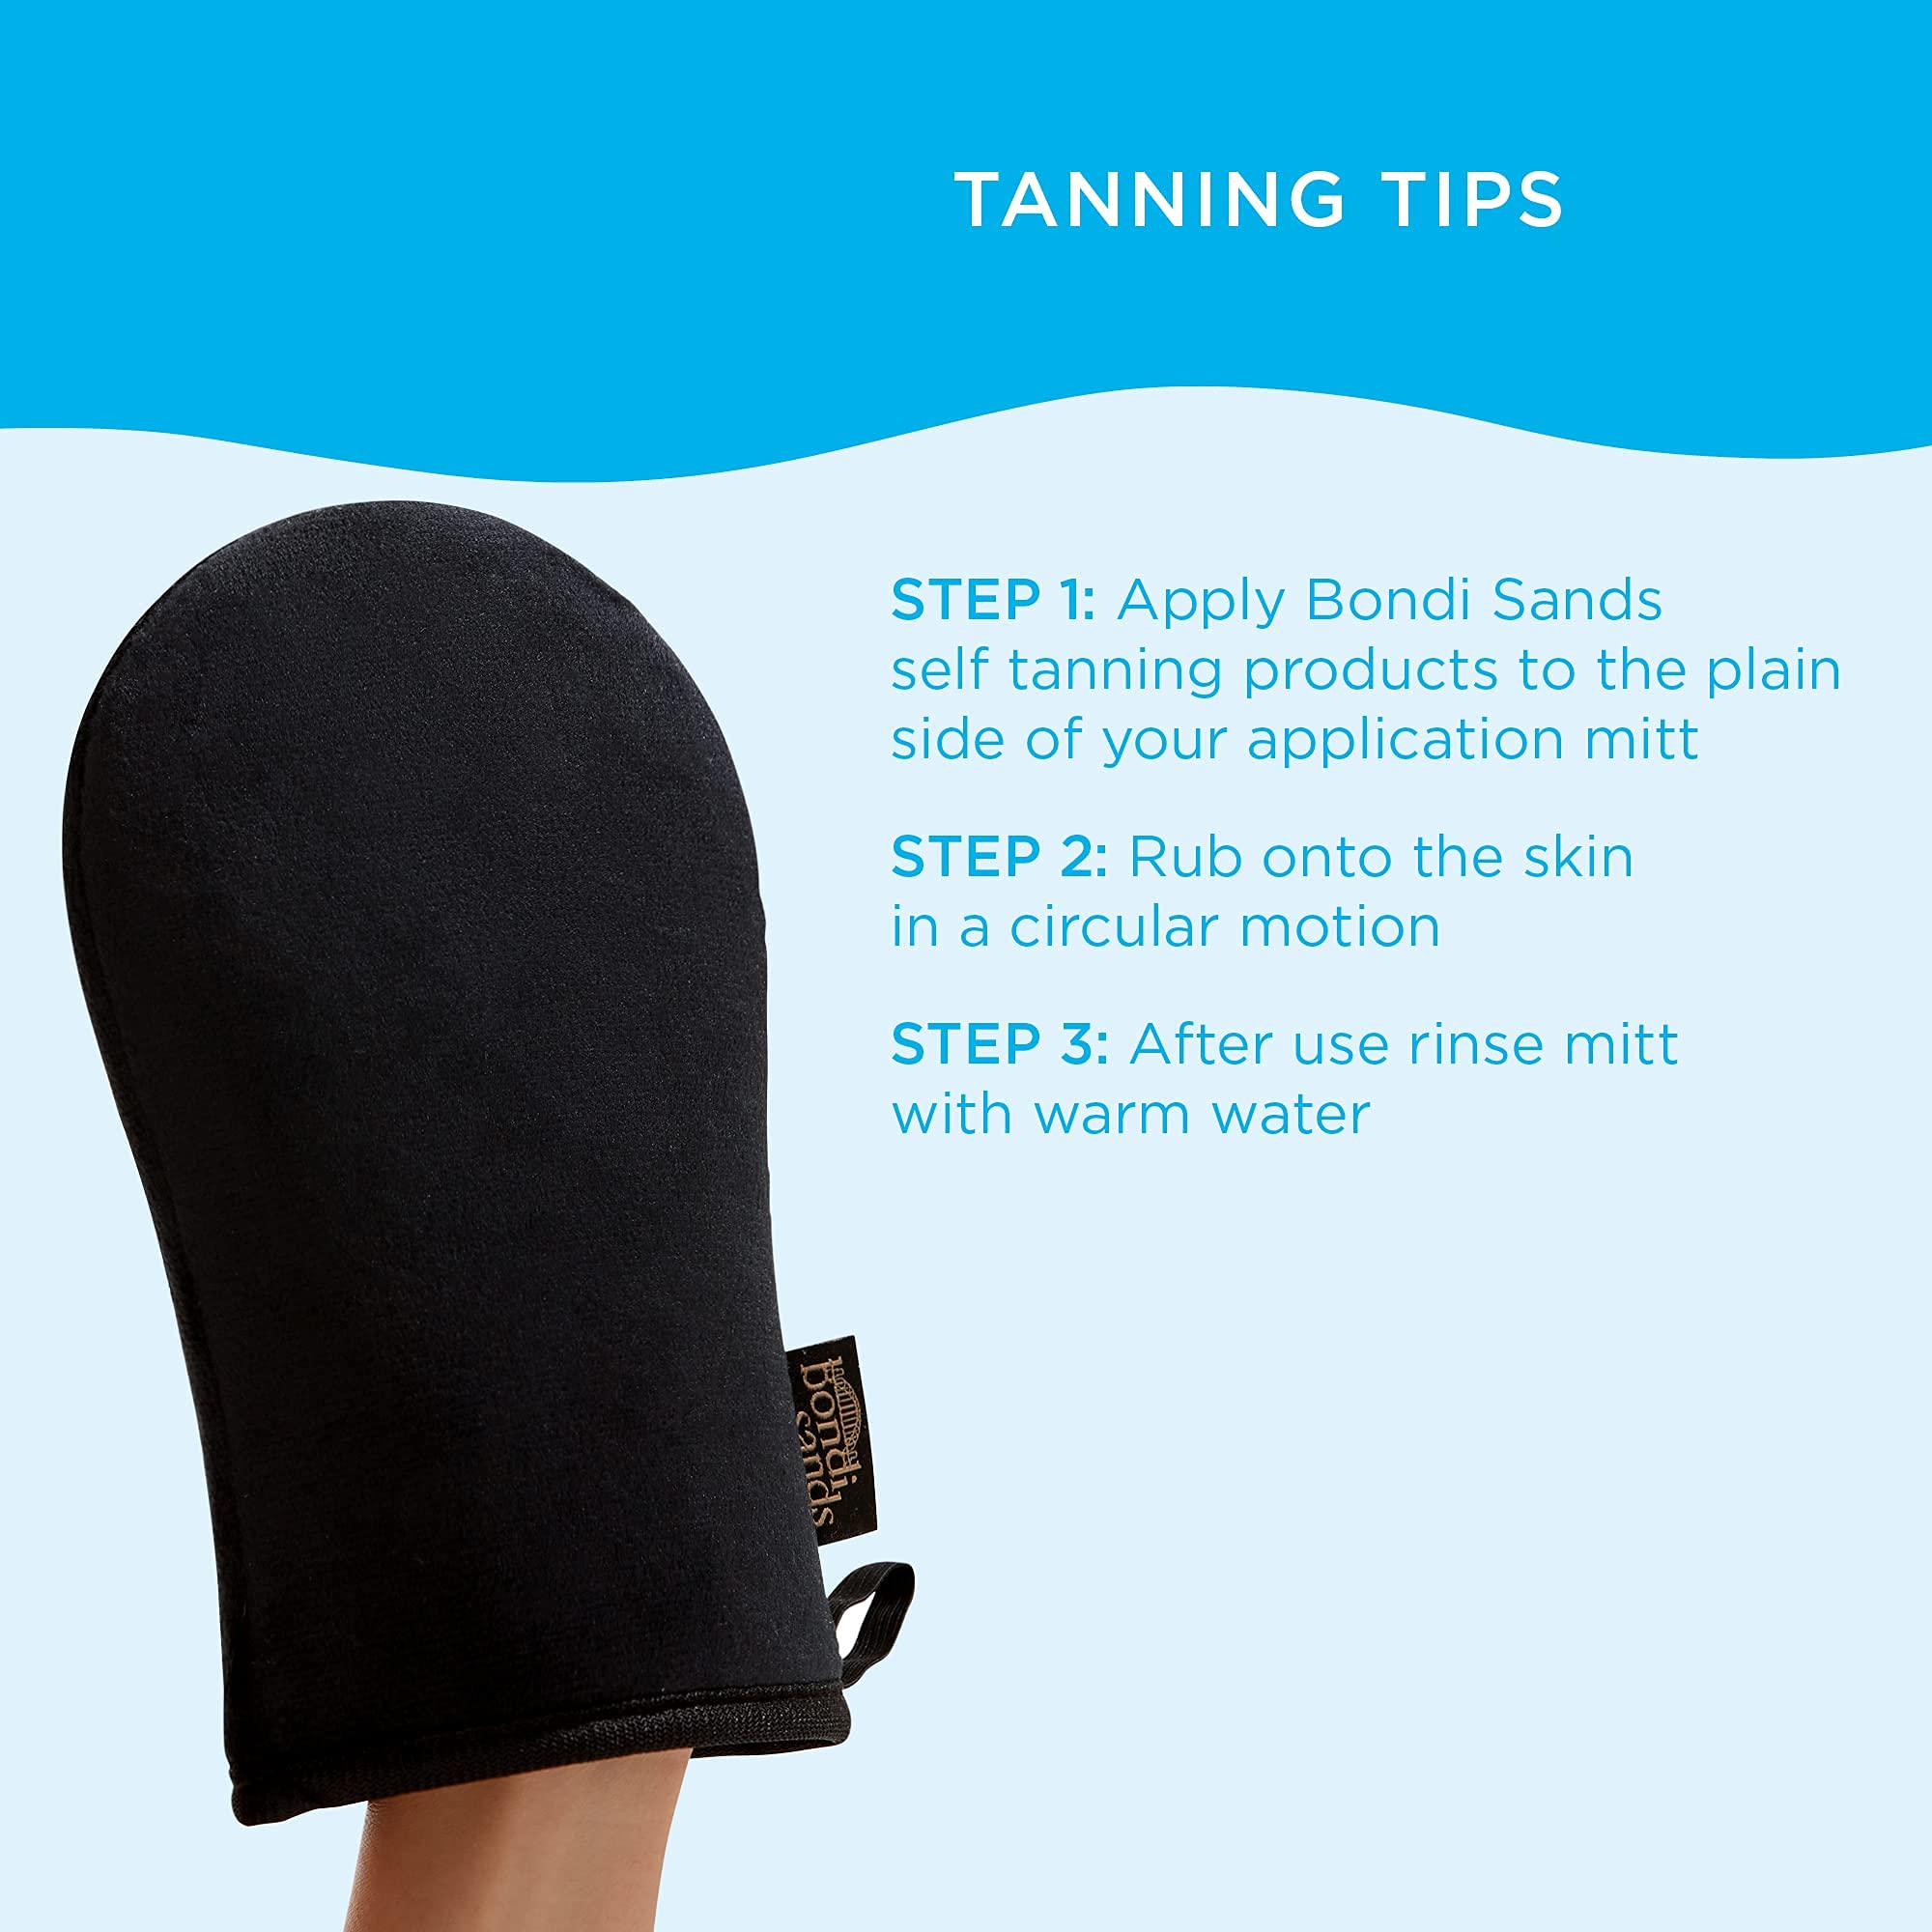 Bondi Sands Light/Medium Self Tanning Foam Value Kit | Includes 2 Lightweight Sunless Tan Foams + 1 Application Mitt for a Flawless Finish ($54 Value)